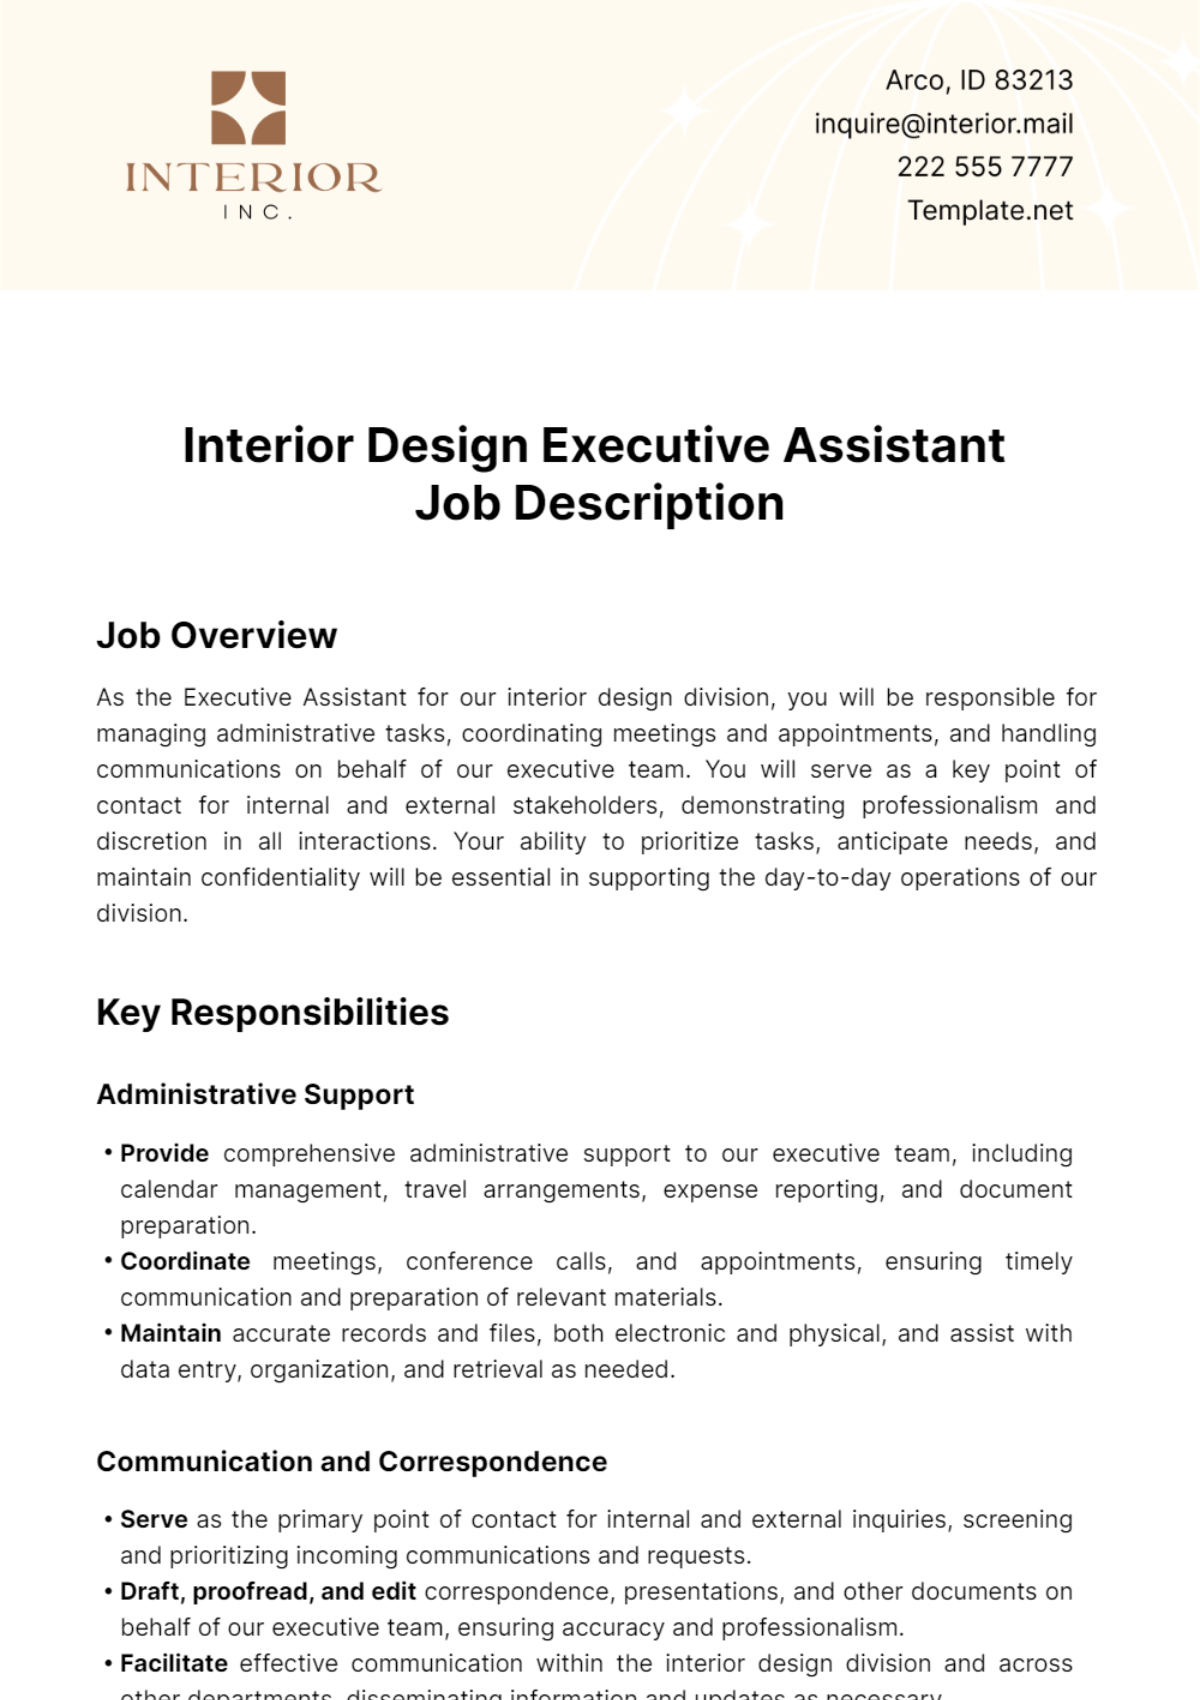 Free Interior Design Executive Assistant Job Description Template